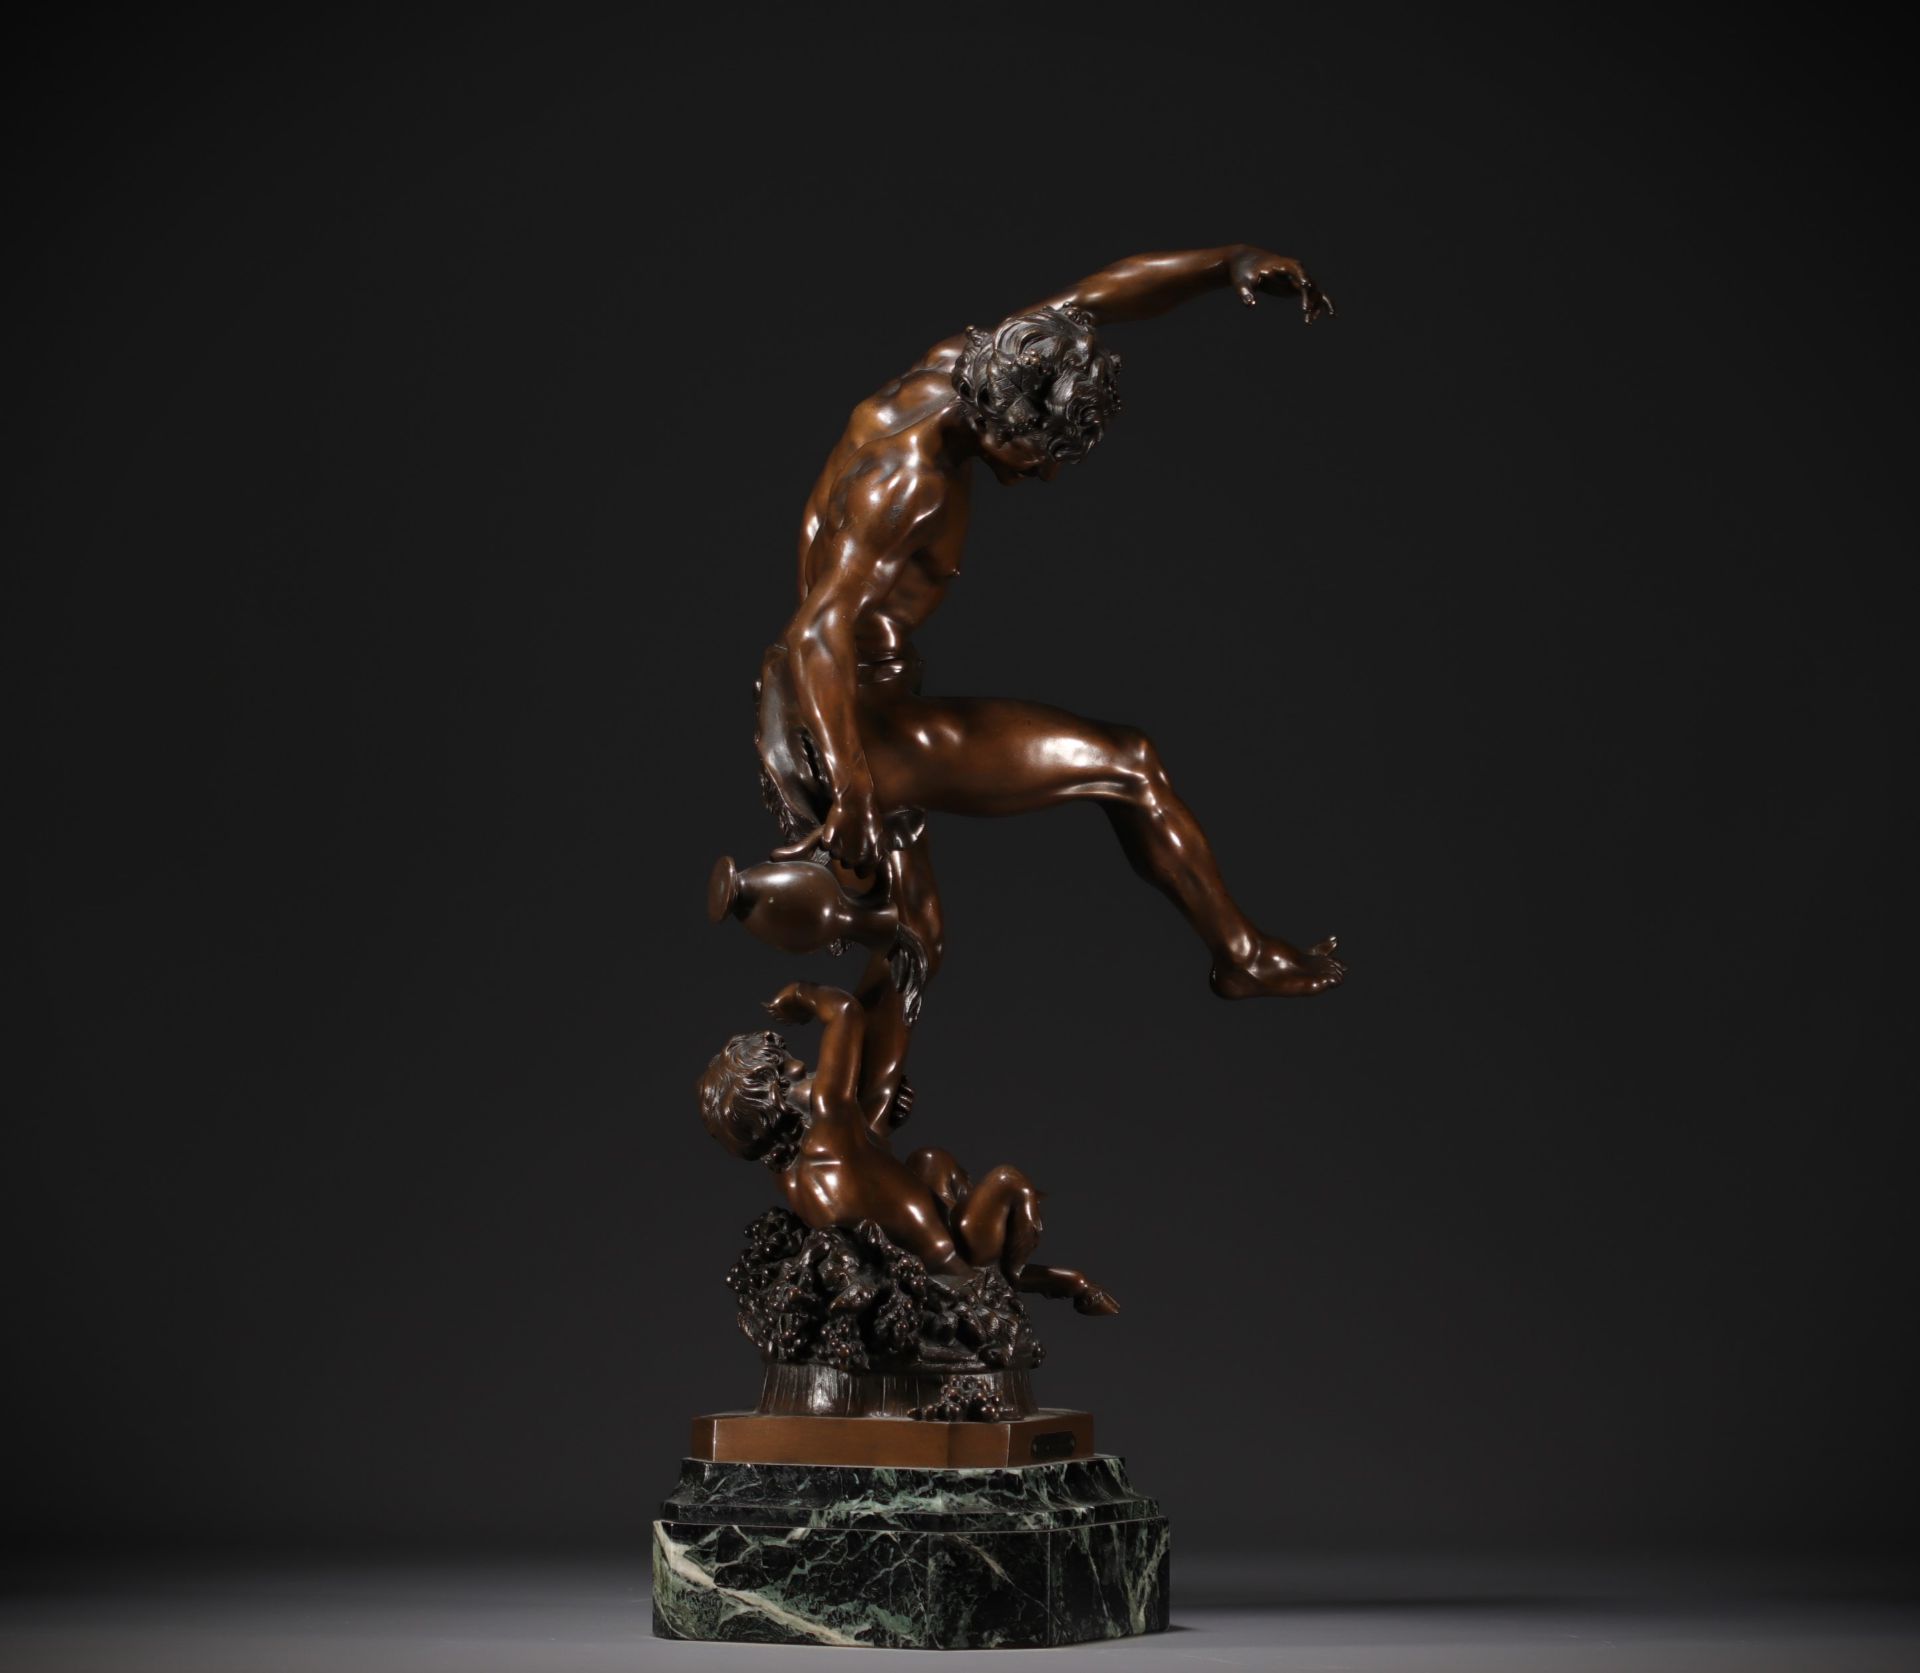 Louis HOLLWECK (1865-1935) "Le Vin" Large bronze sculpture on marble base. - Image 4 of 7